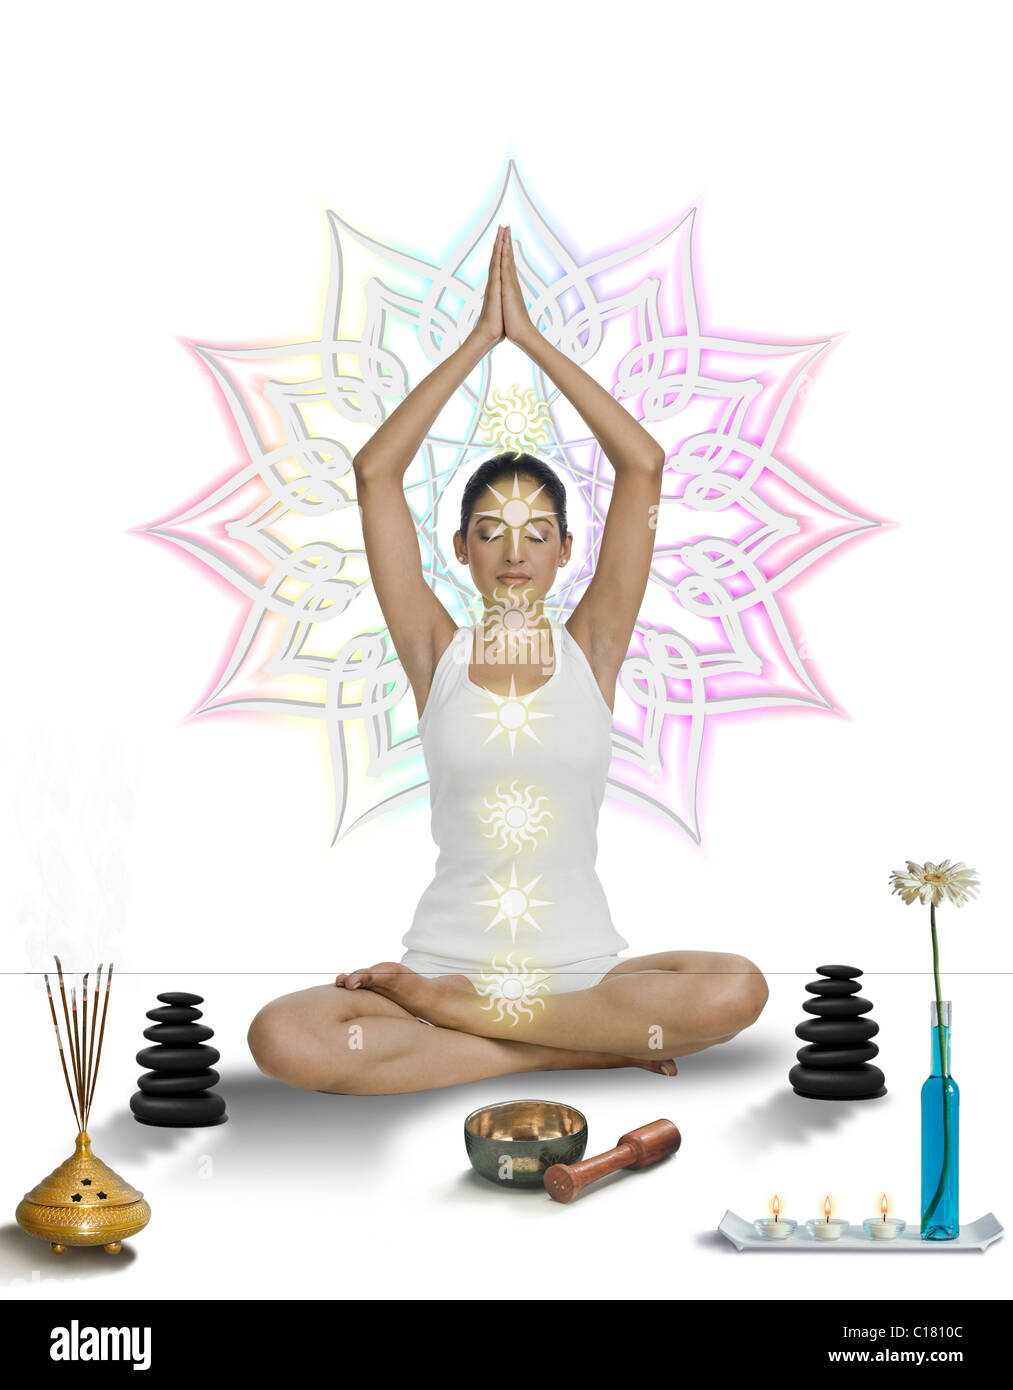 Illustrative representation showing seven primary Chakras of human body while doing meditation Stock Photo